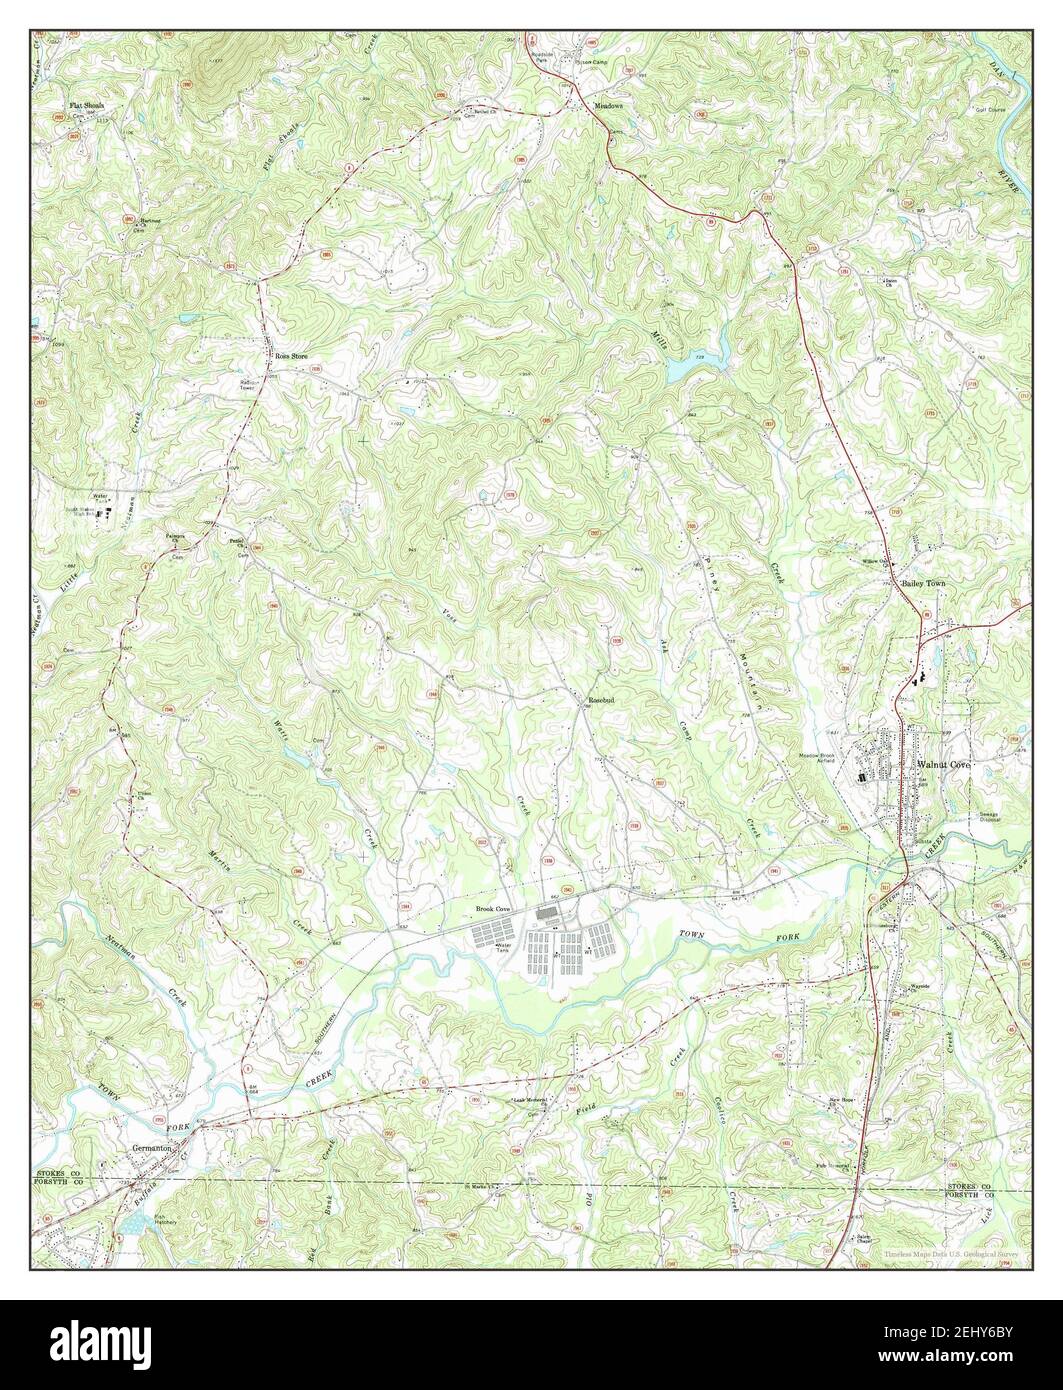 Walnut Cove North Carolina Map 1971 124000 United States Of America By Timeless Maps Data 2165